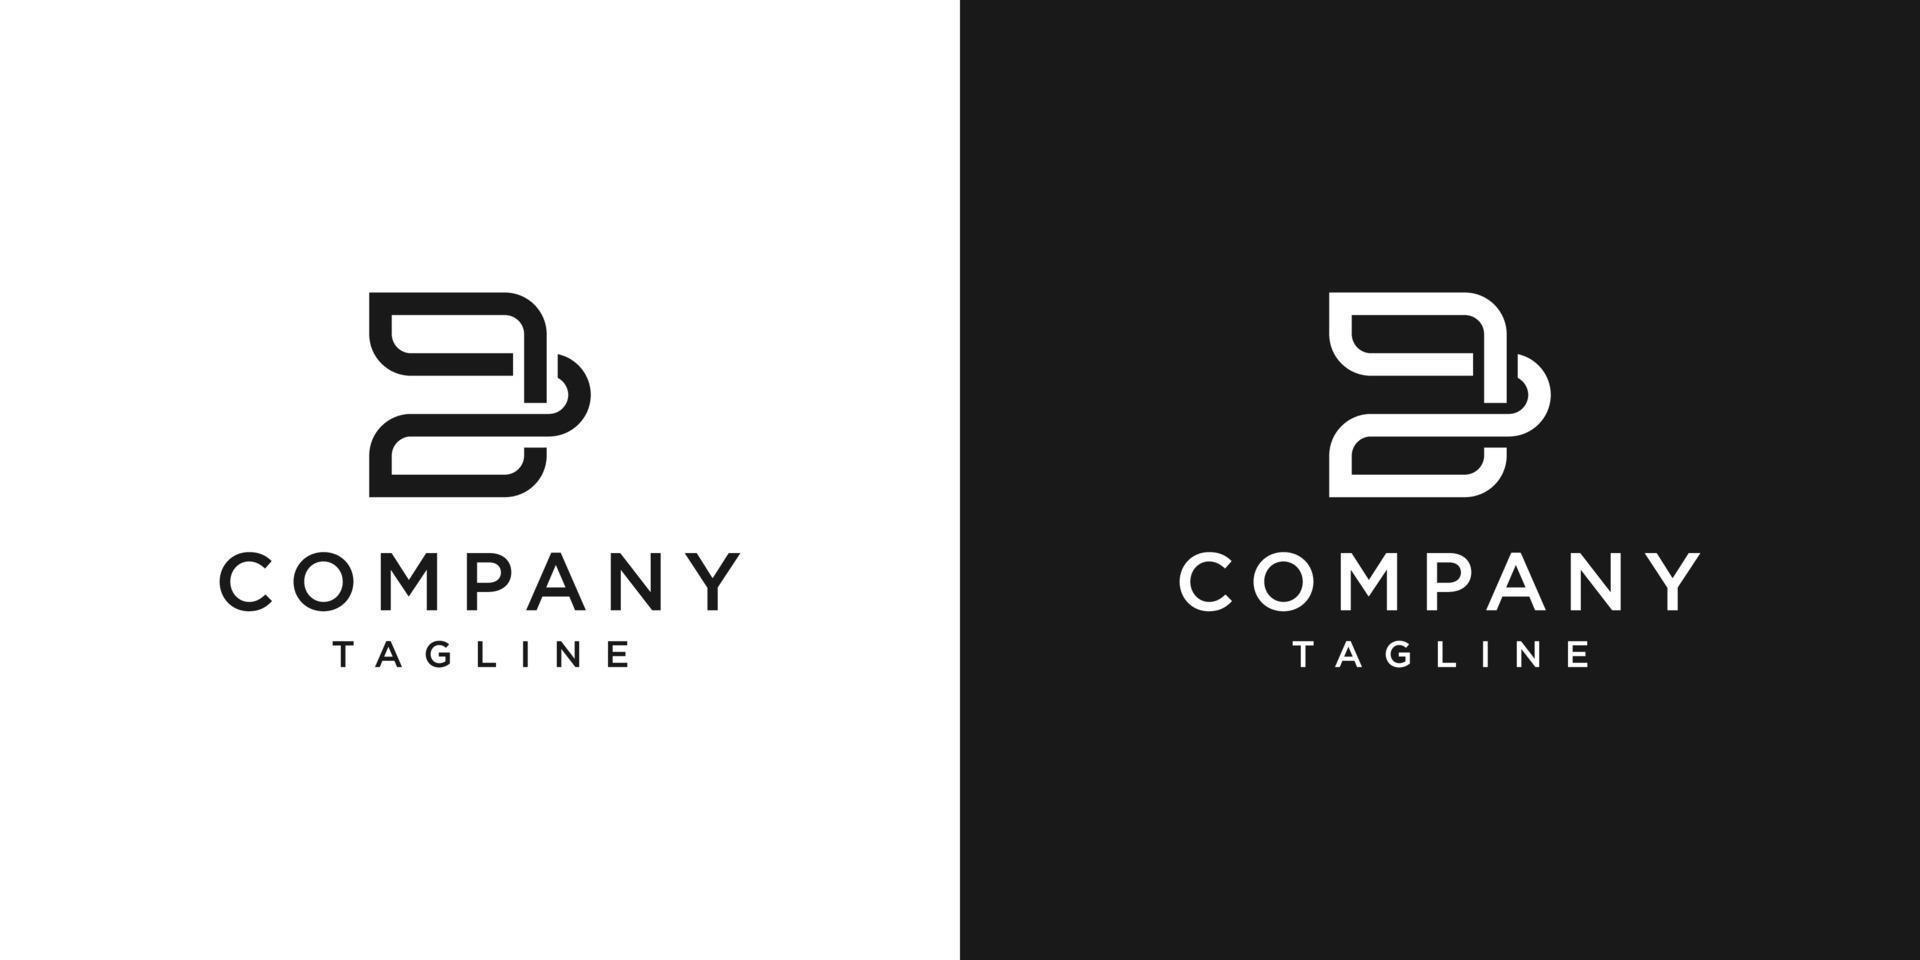 Creative Letter D Monogram Logo Design Icon Template White and Black Background vector